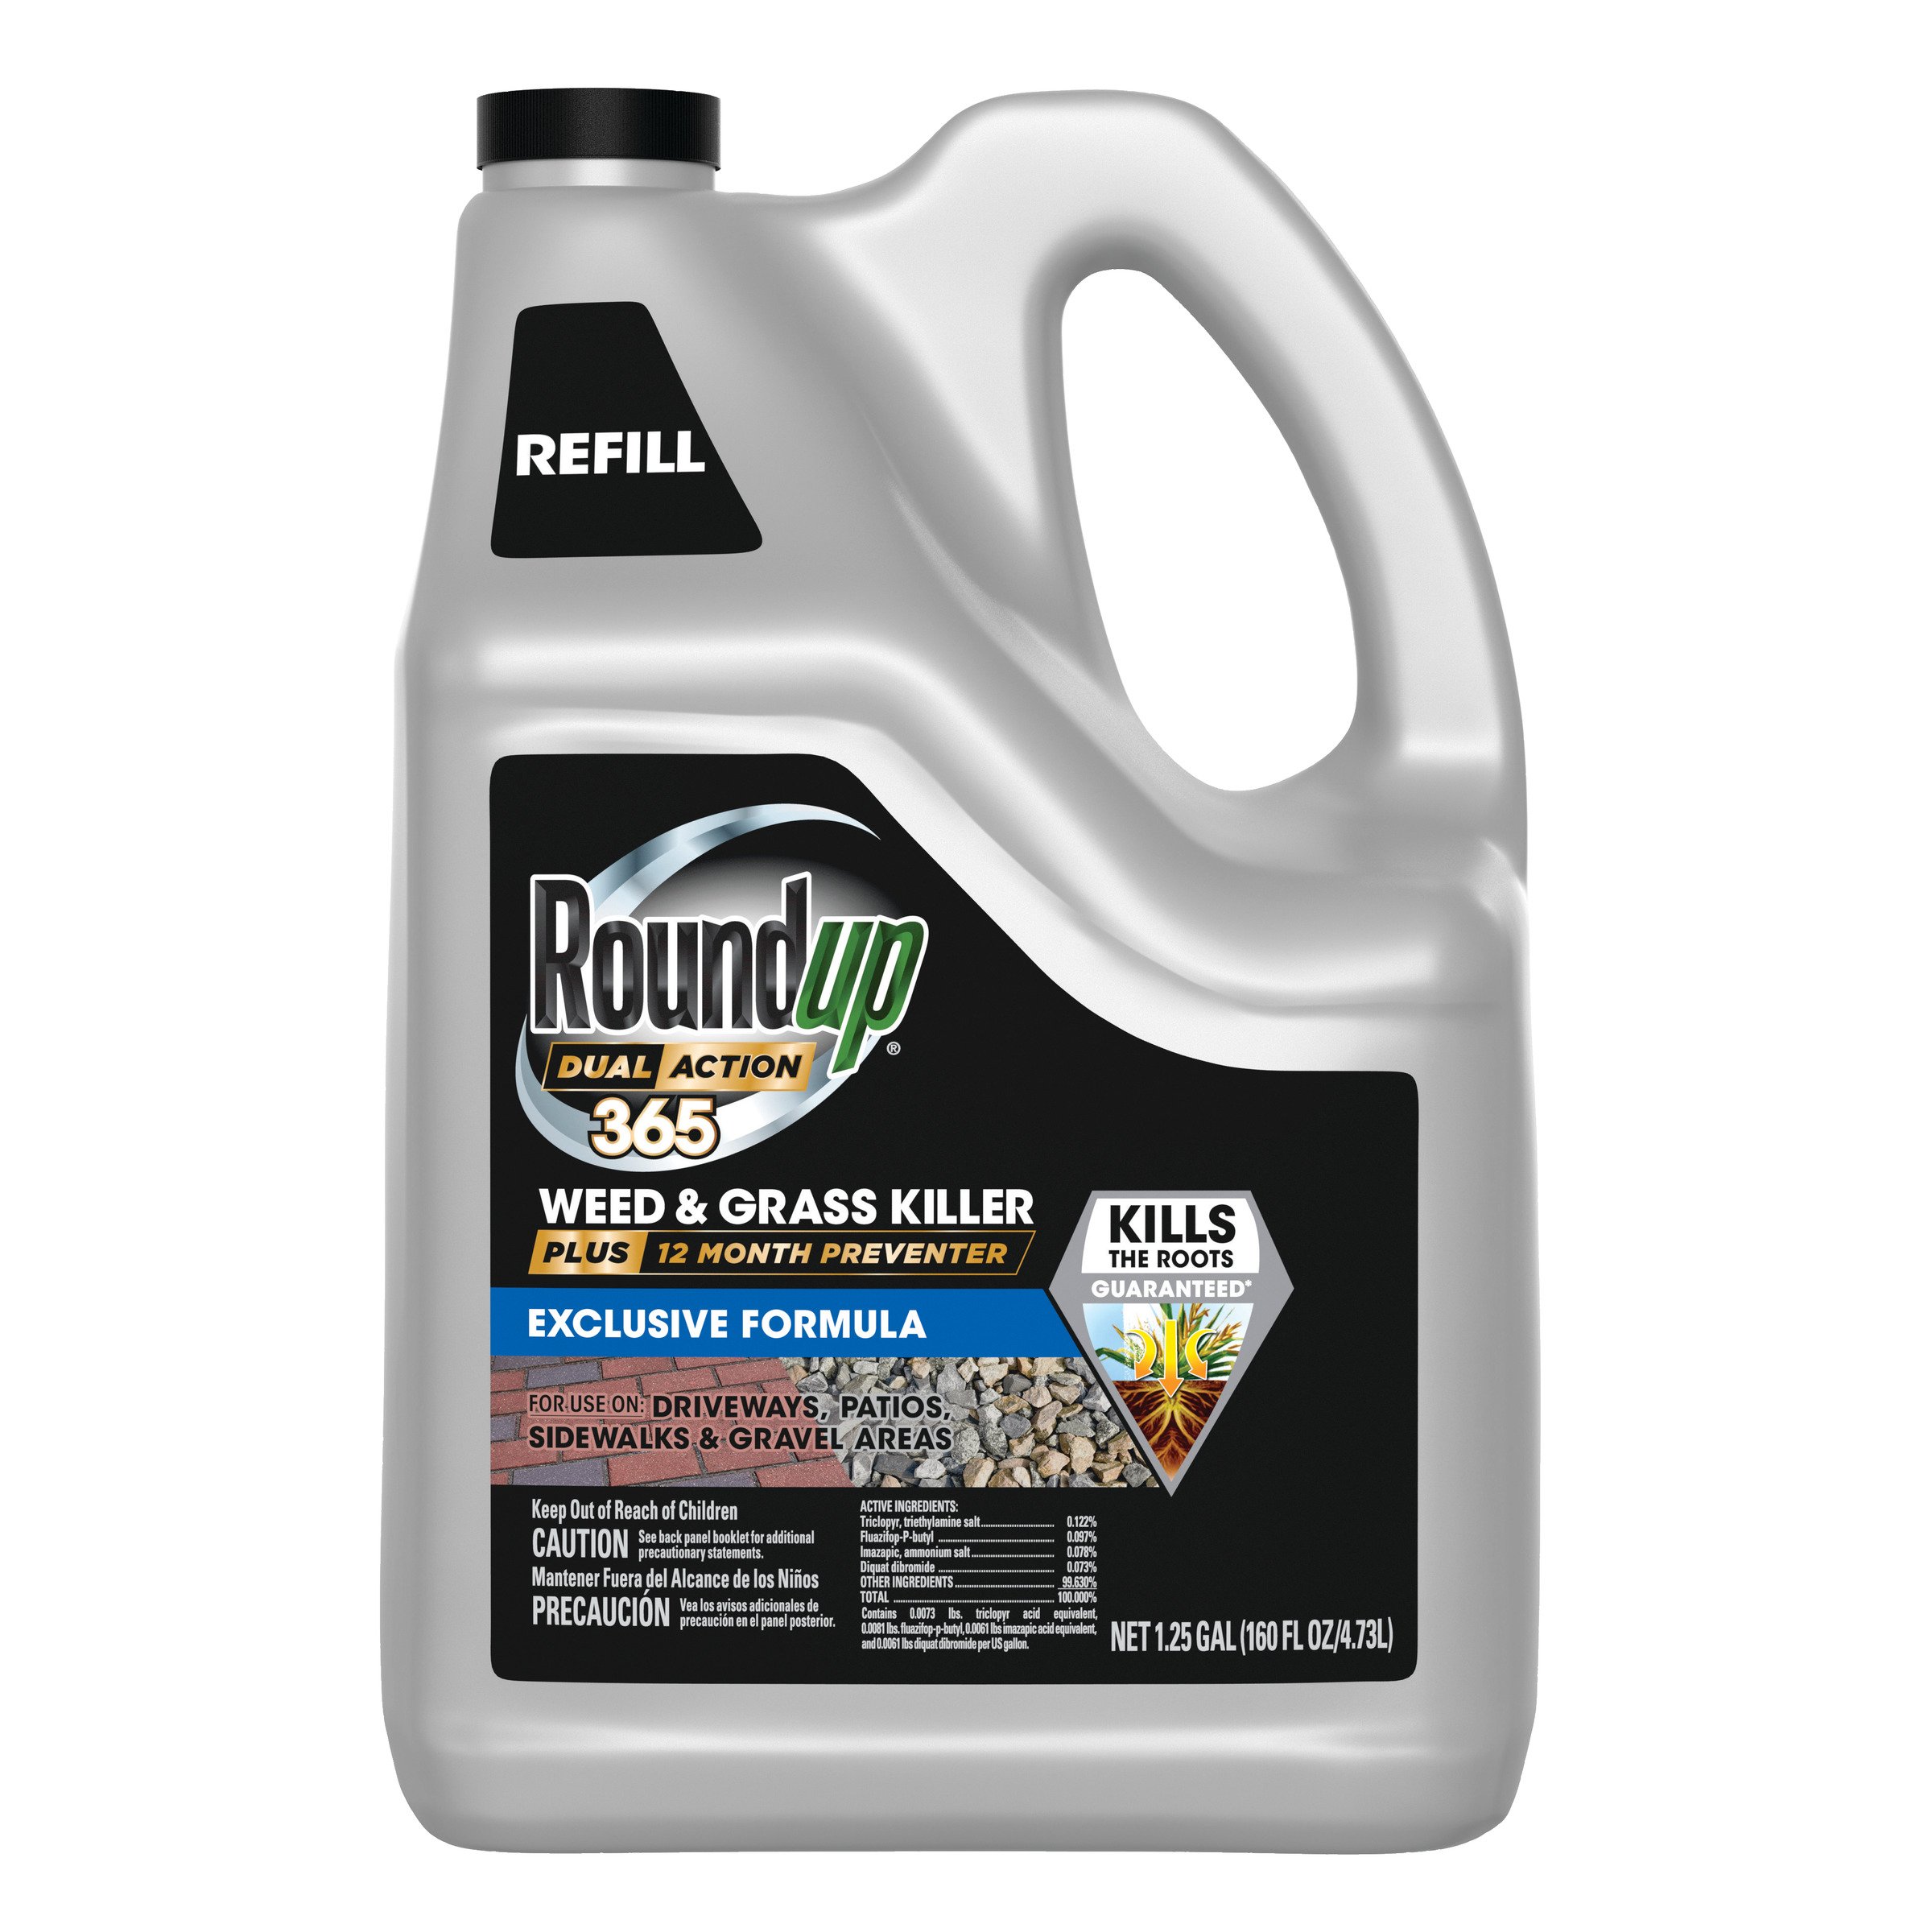 Roundup Dual Action 365 Weed & Grass Killer Plus 12 Month Preventer Refill, 1.25 Gallon Bottle